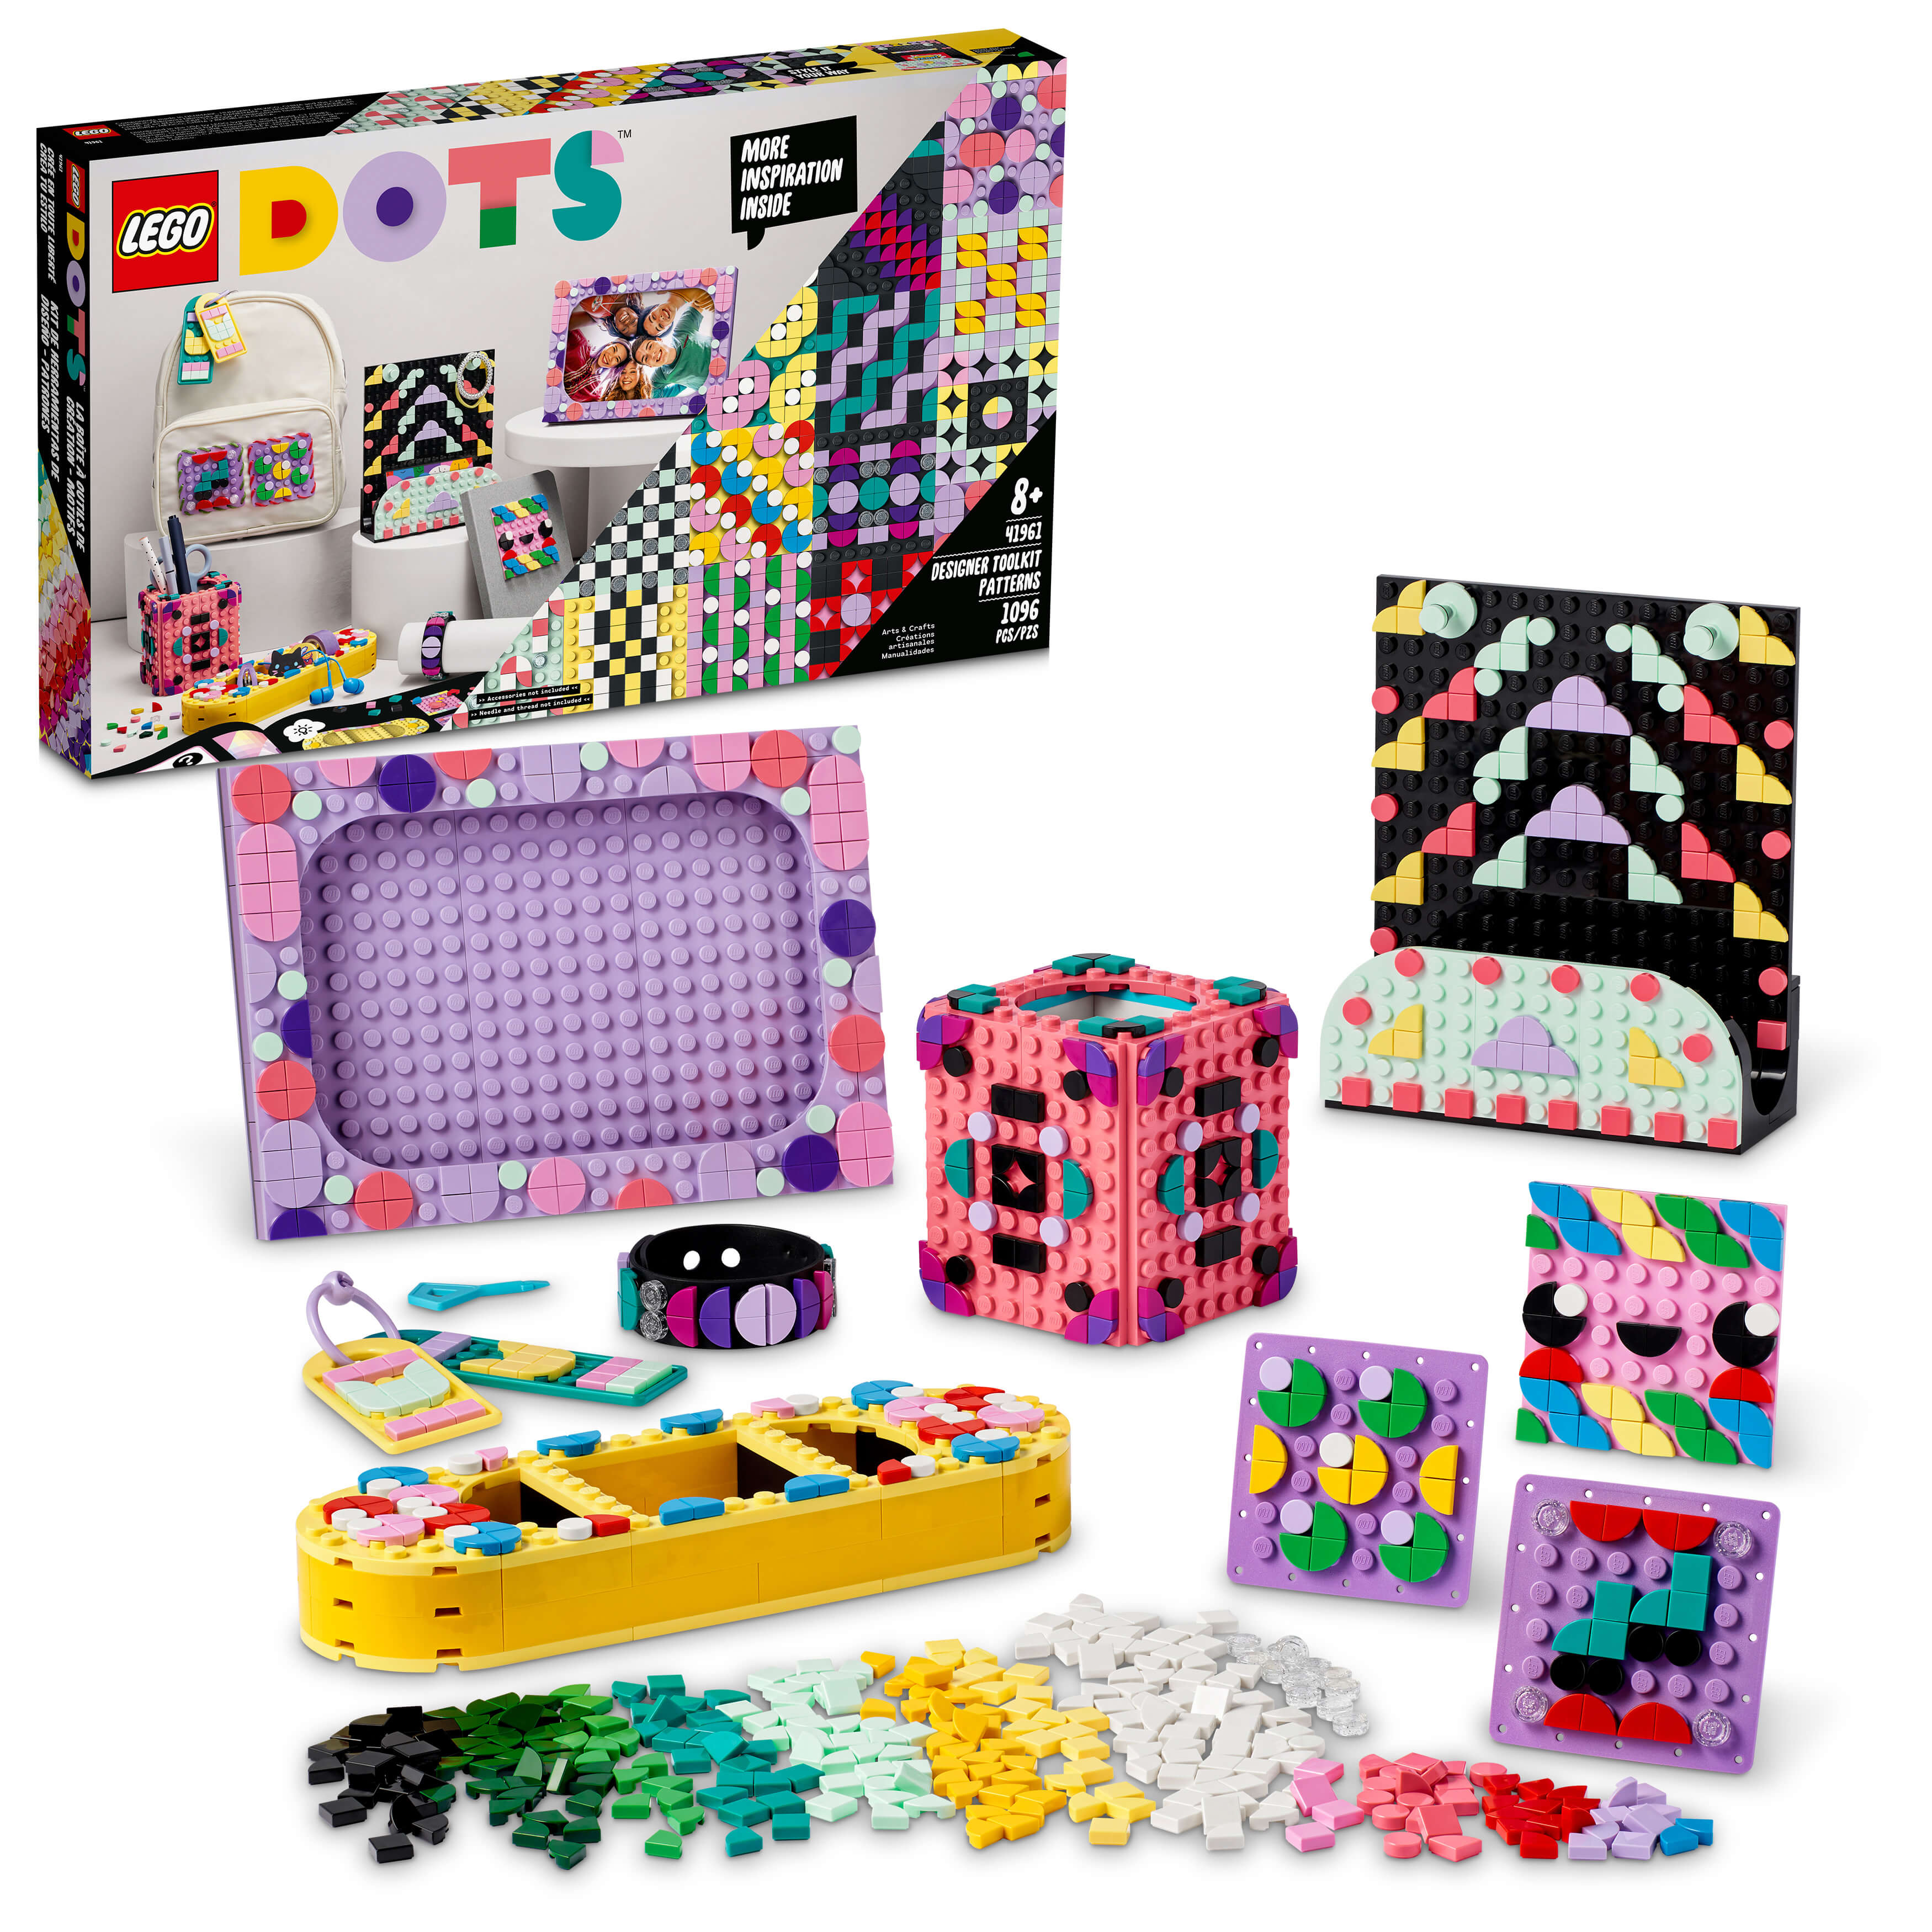 LEGO® DOTS Designer Toolkit Patterns 41961 DIY Craft Decoration Kit (1,096 Pieces)